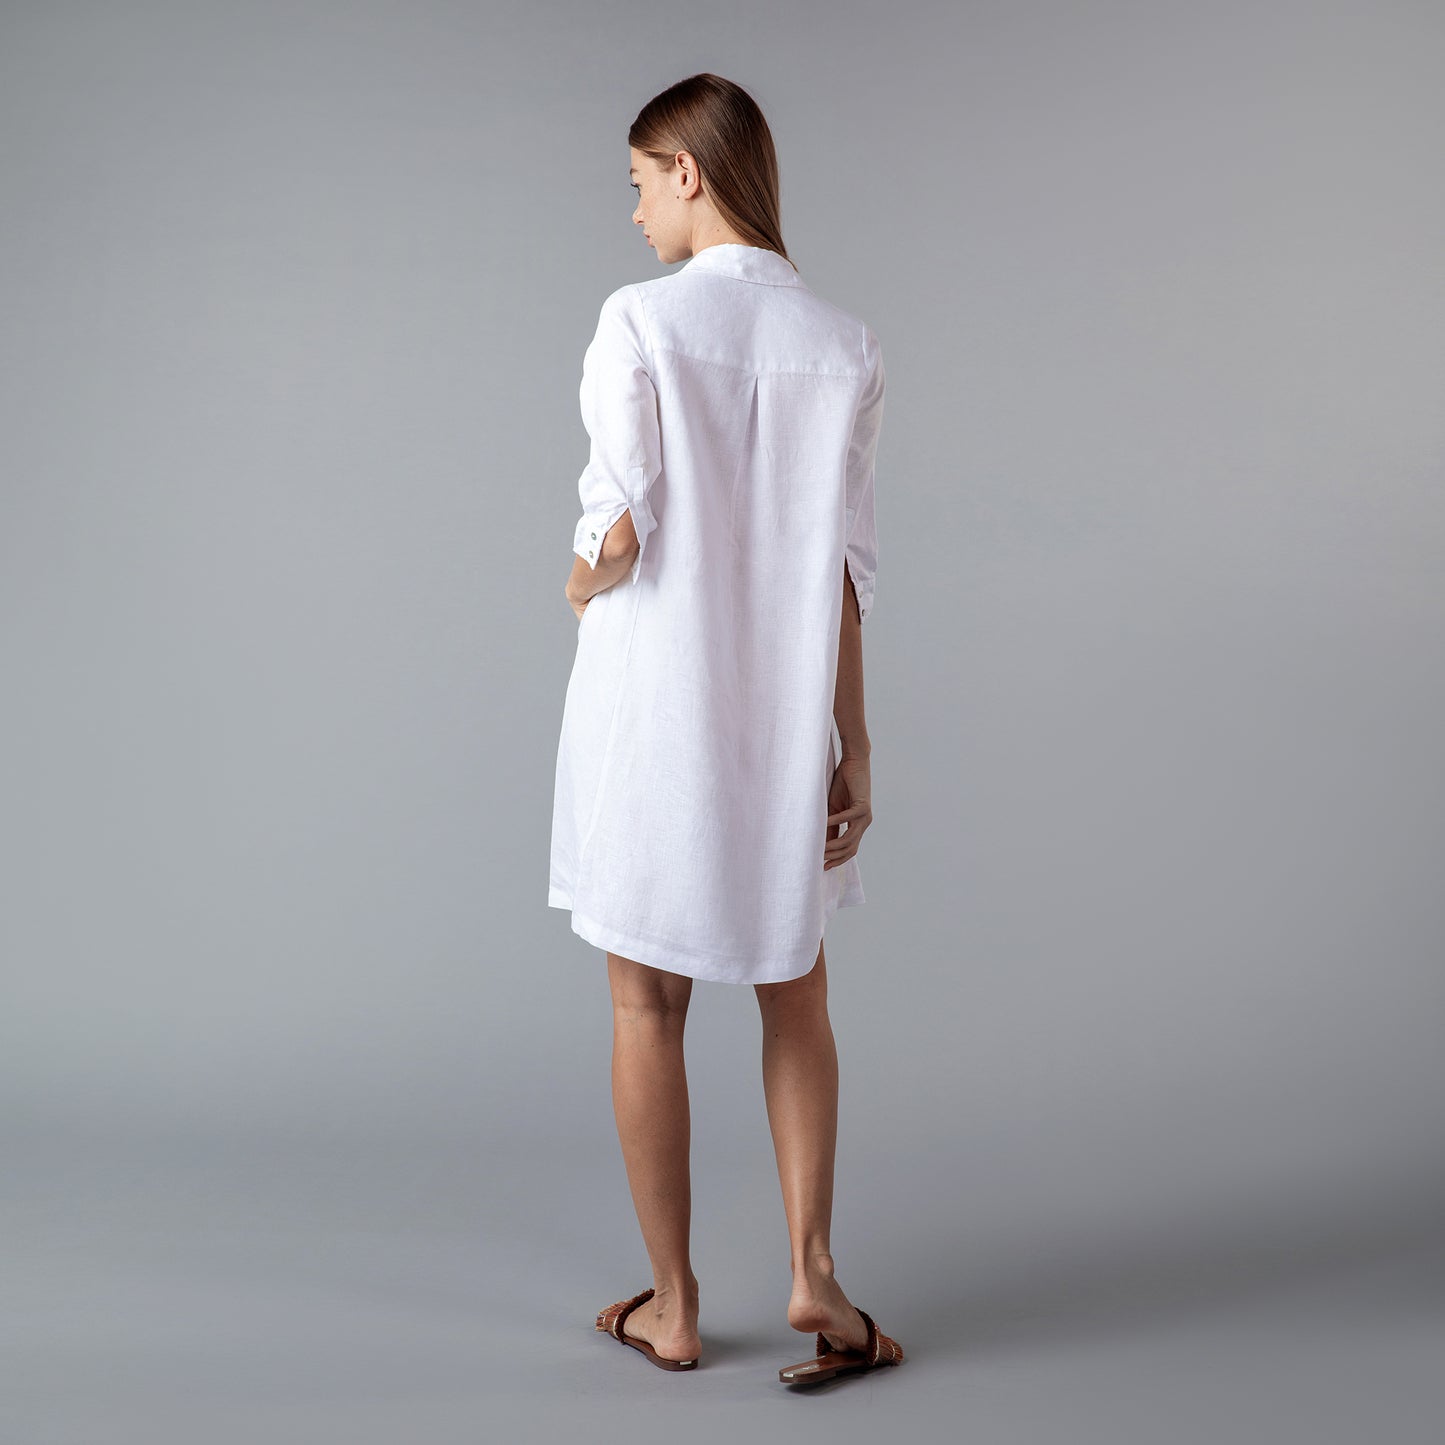 Linen White Shirt dress